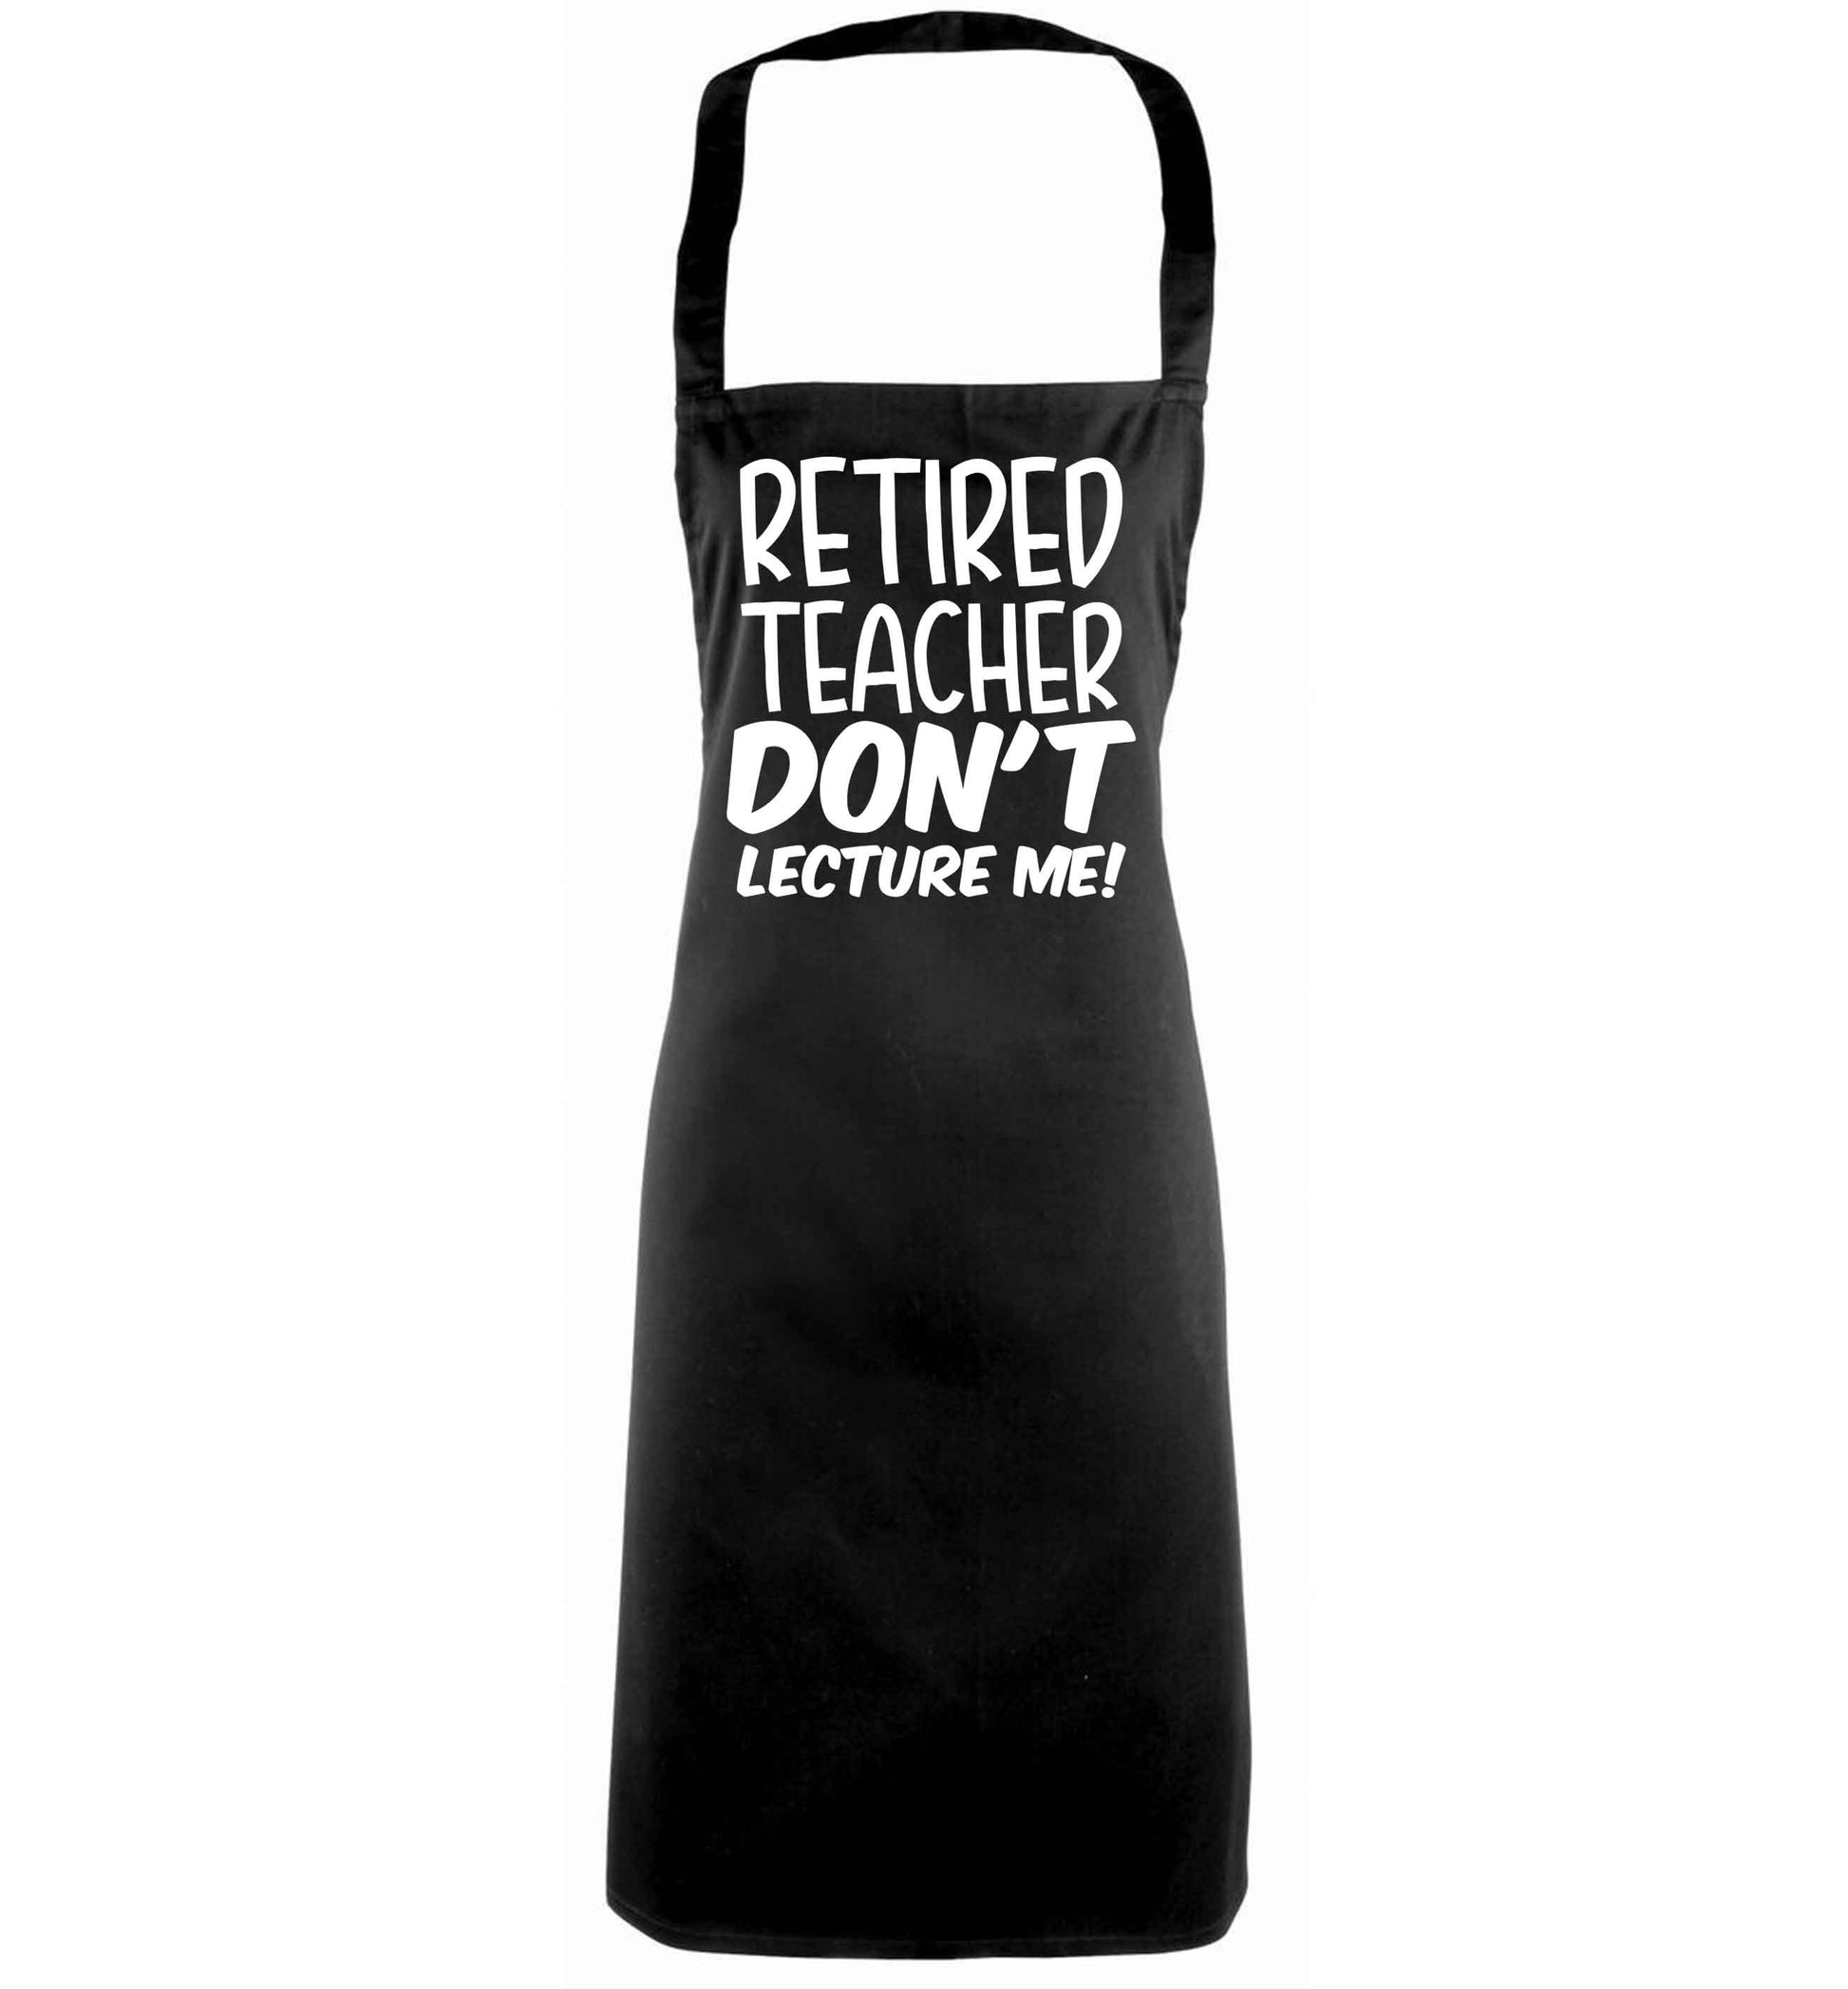 Retired teacher don't lecture me! black apron